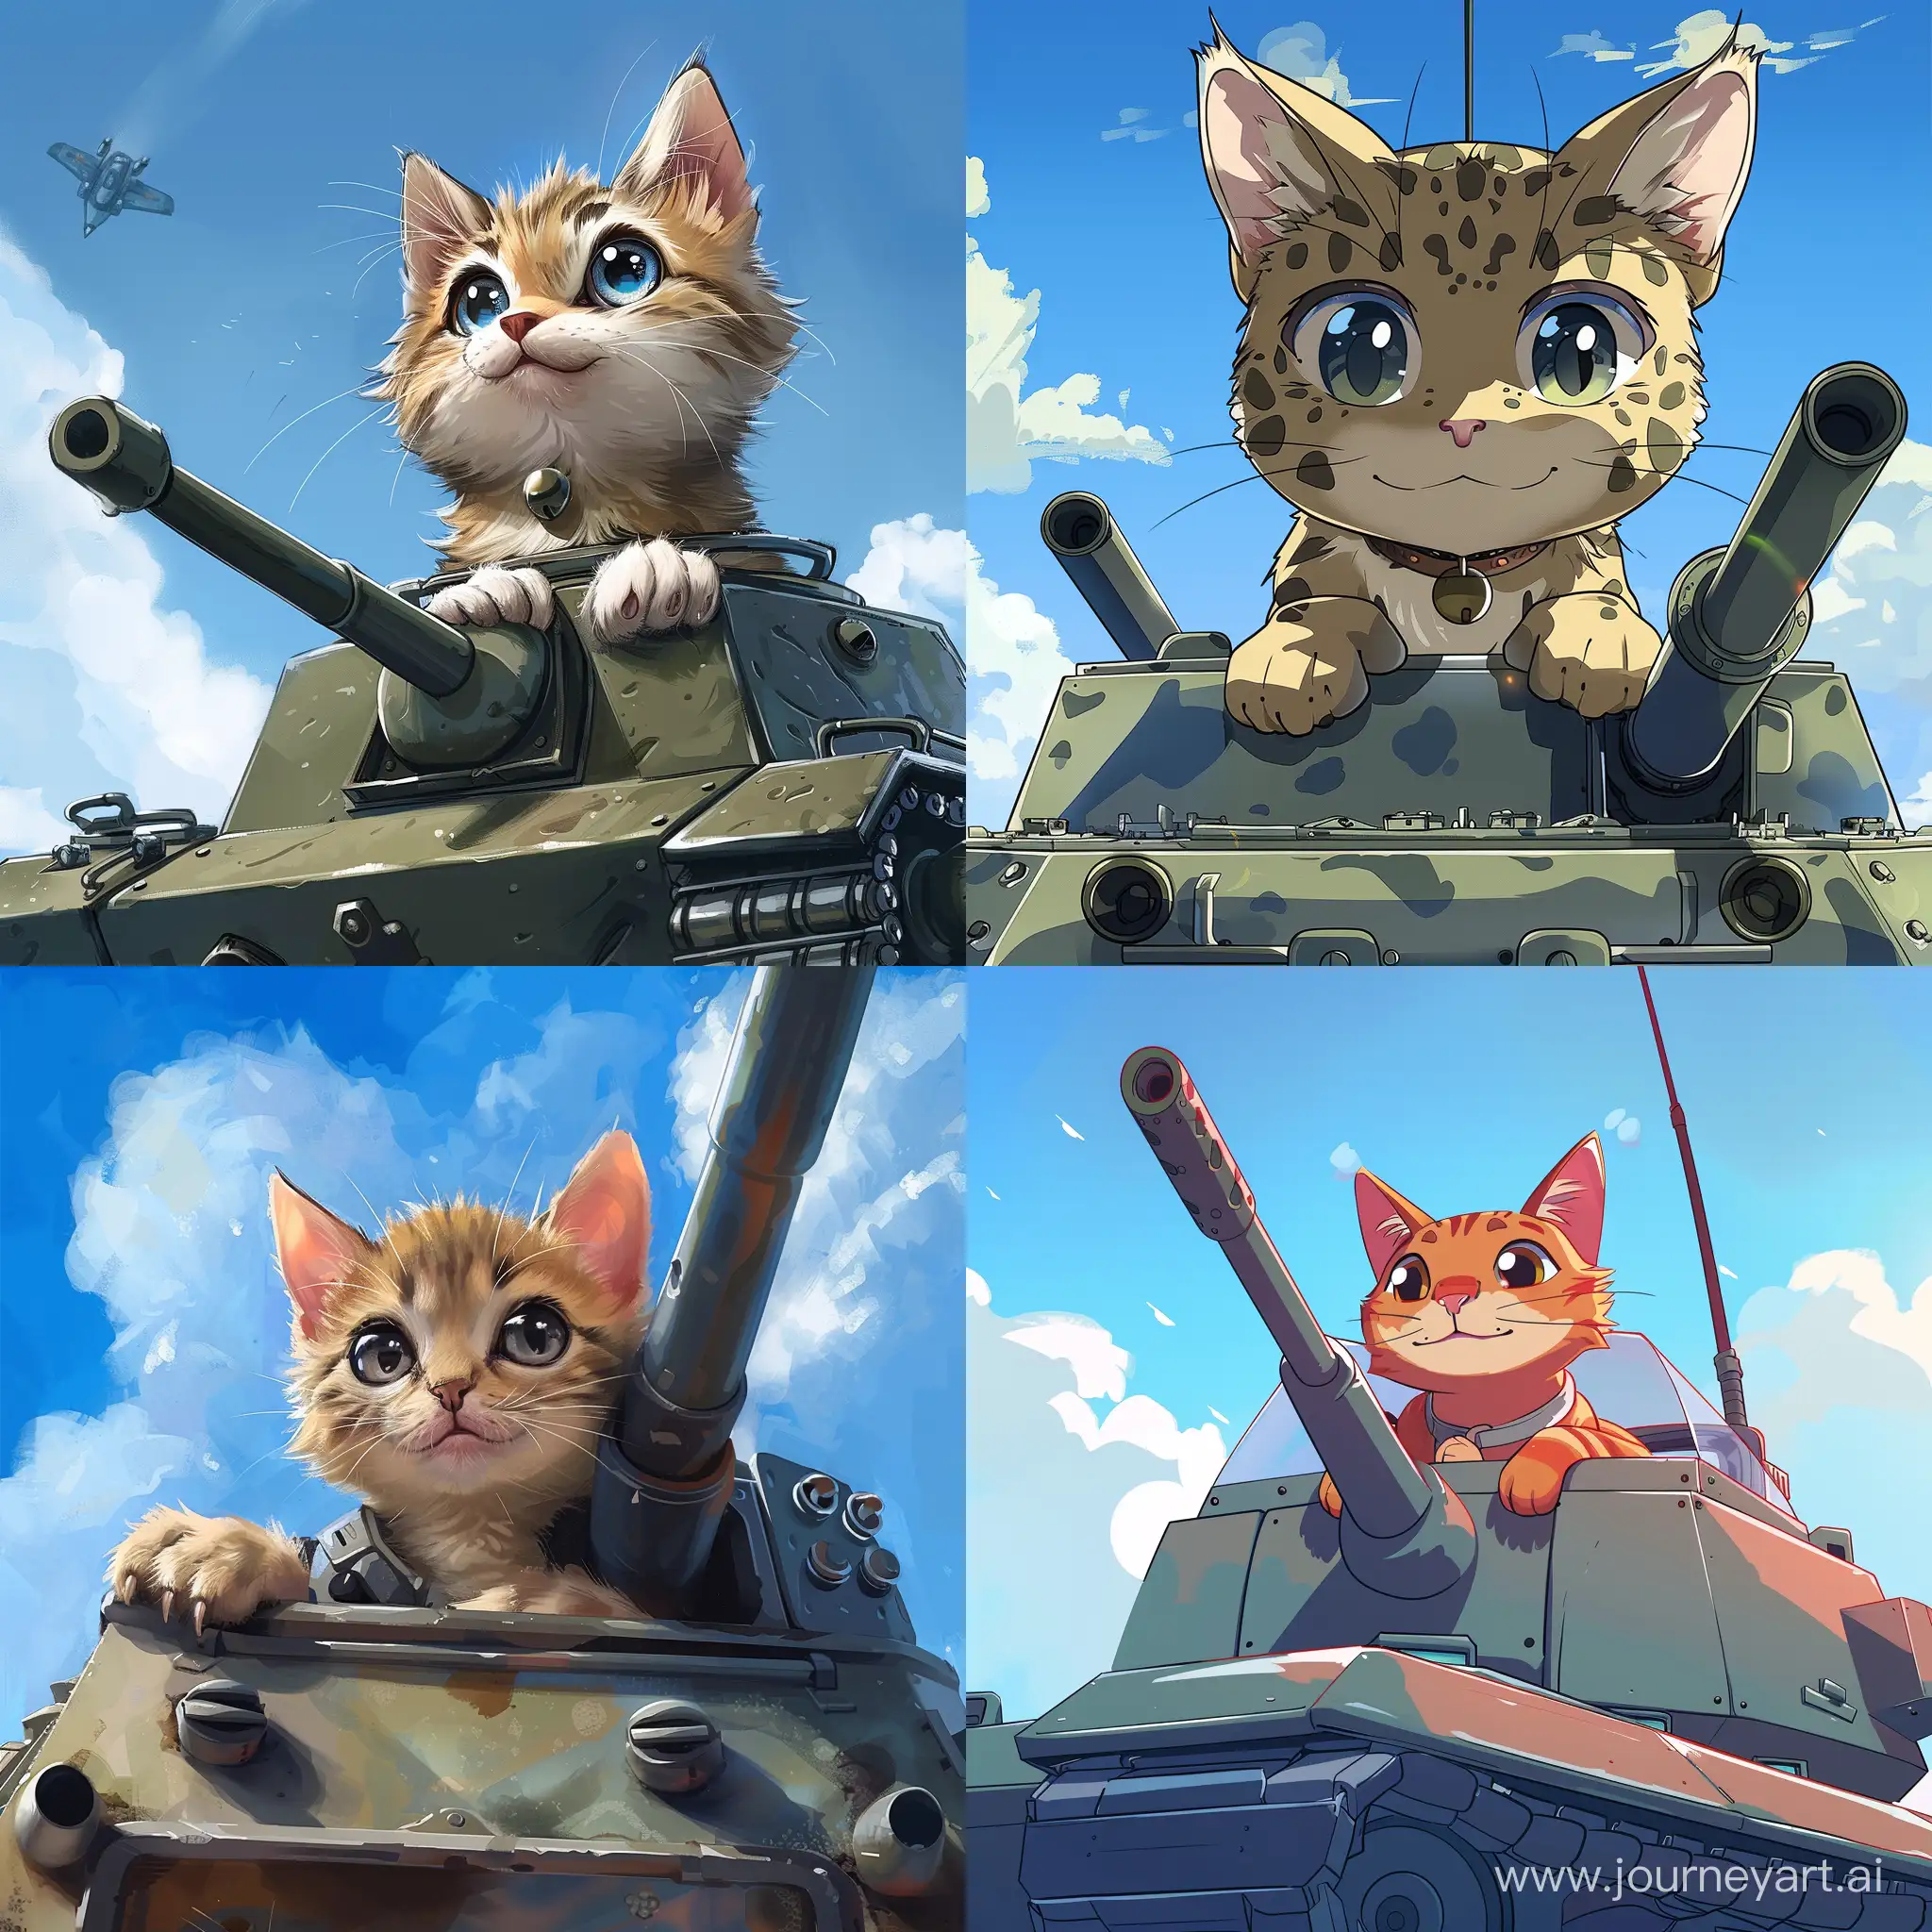 Adorable-Cartoon-Cat-Riding-Tank-Under-a-Clear-Blue-Sky